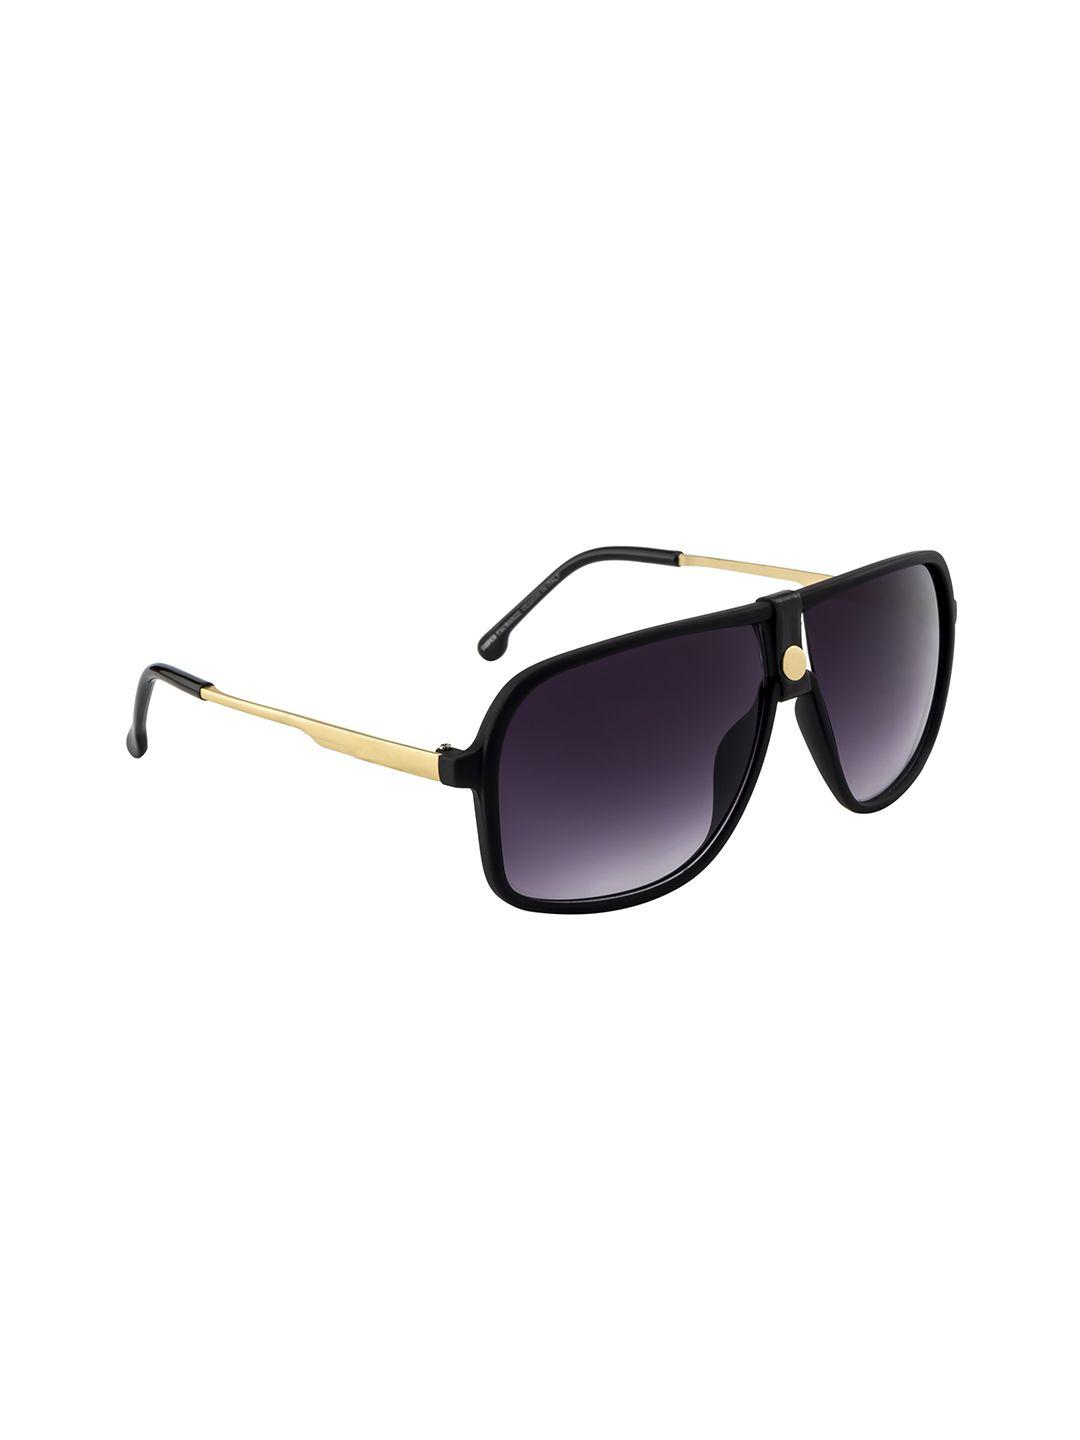 mast-&-harbour-full-rim-square-sunglasses-with-uv-protected-lens-mh-m25112